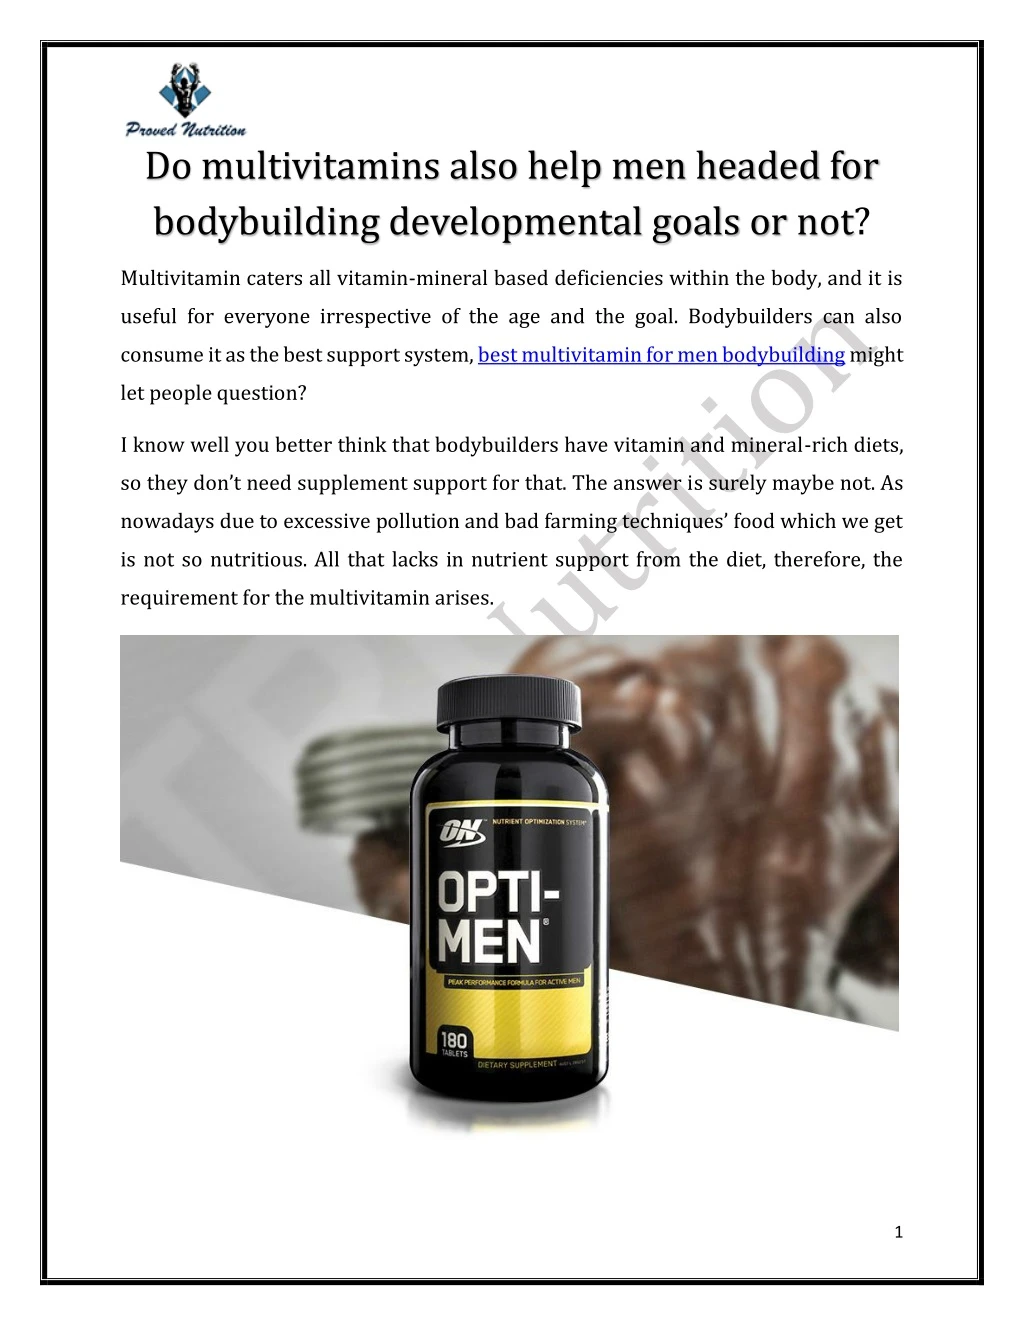 do multivitamins also help men headed